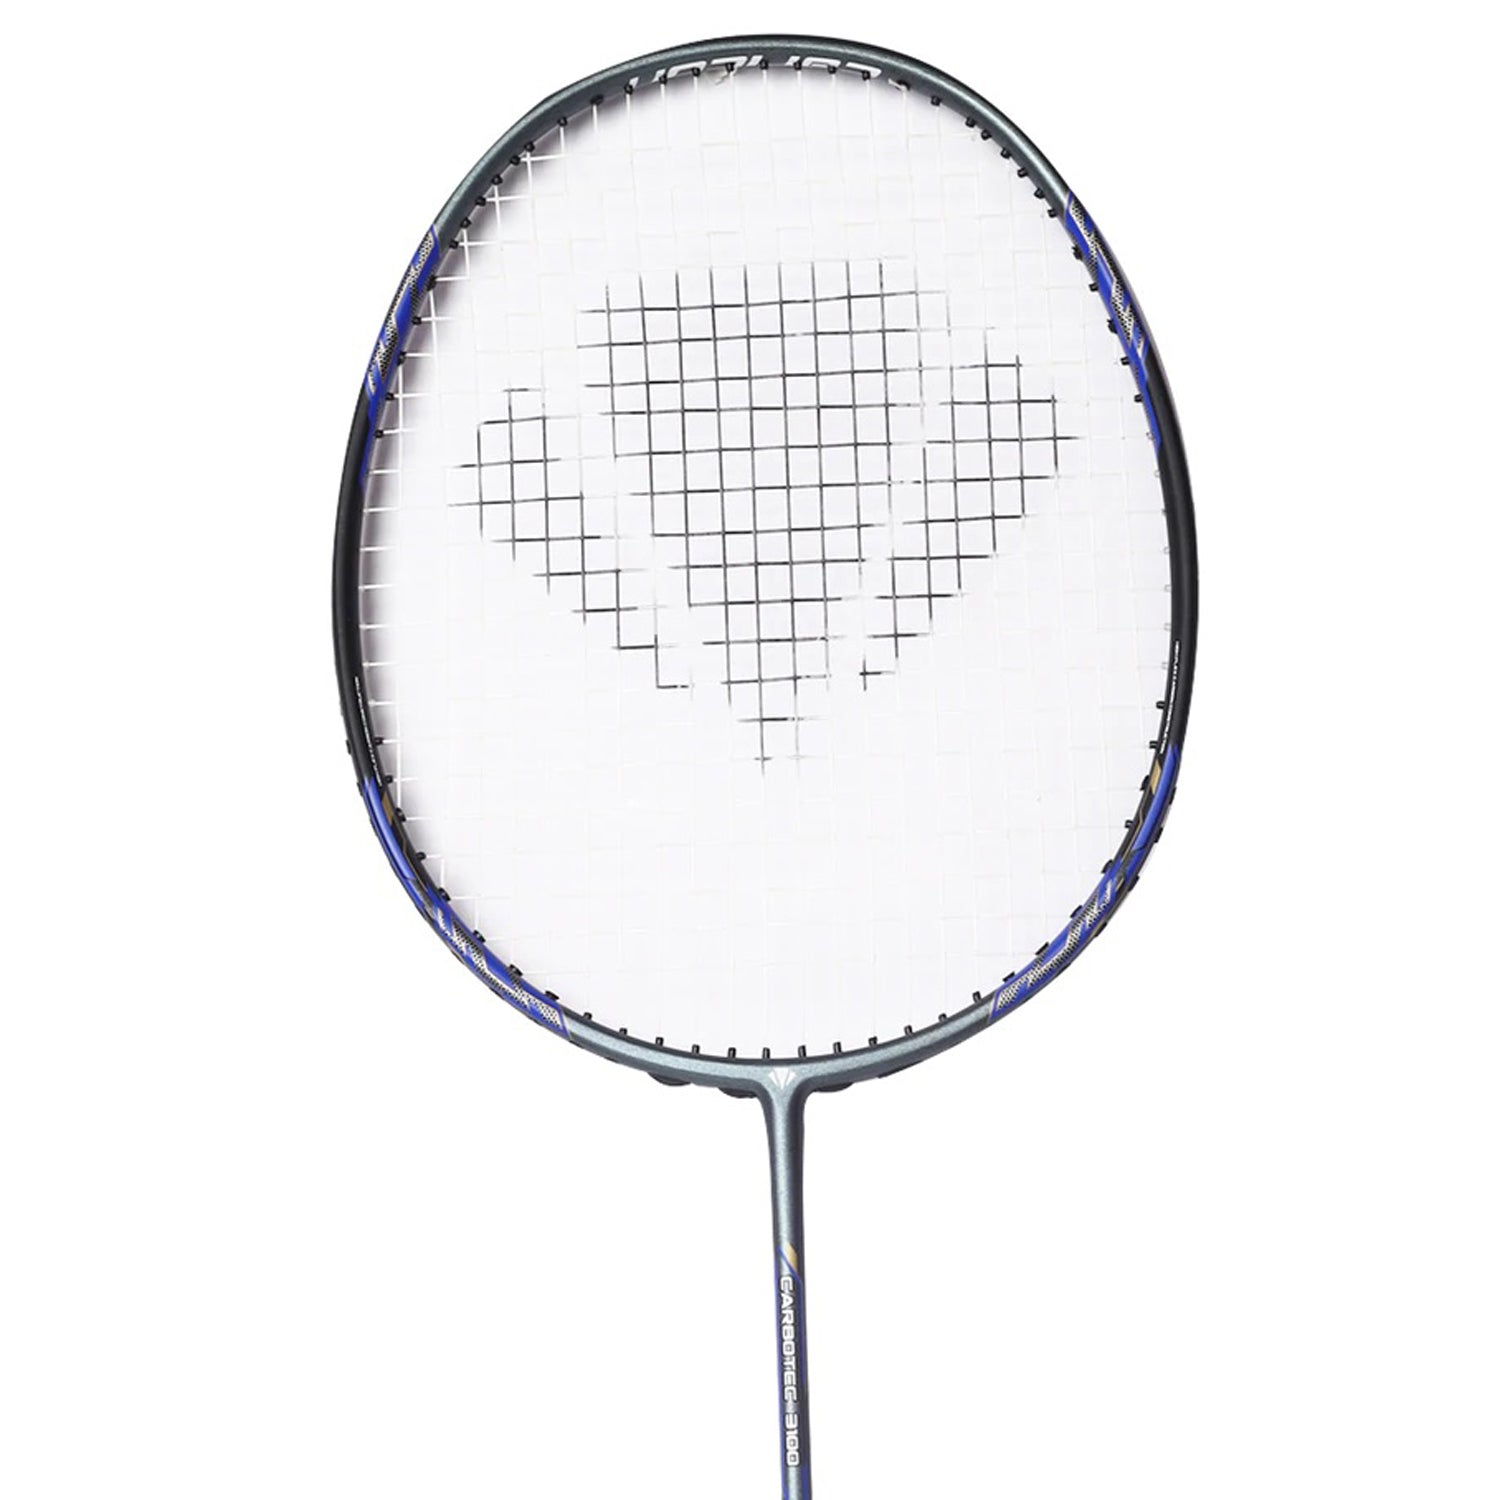 Carlton Carbotec 3100 Badminton Racket - Best Price online Prokicksports.com